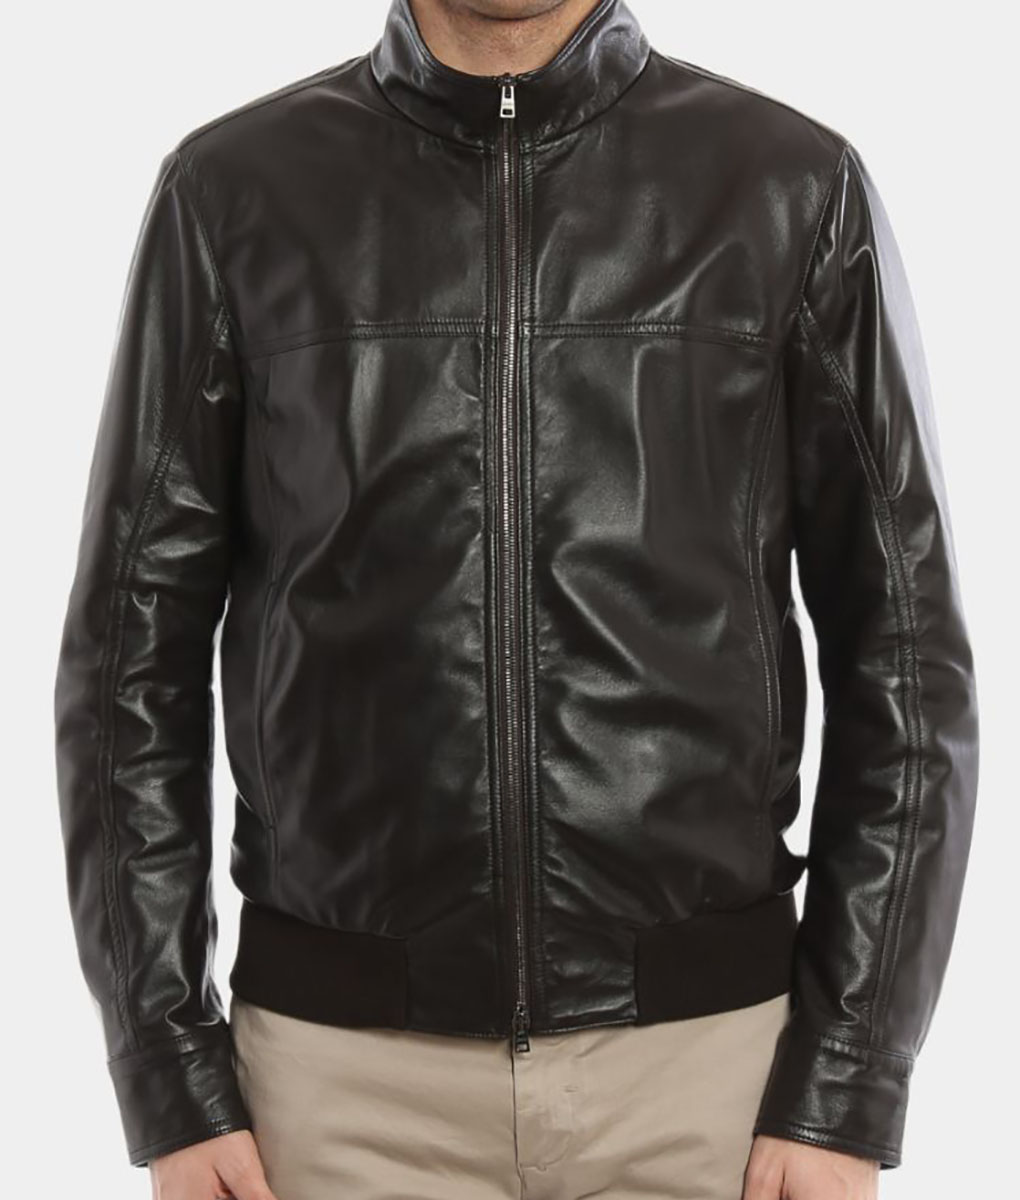 Aaron Black Leather Jacket (2)